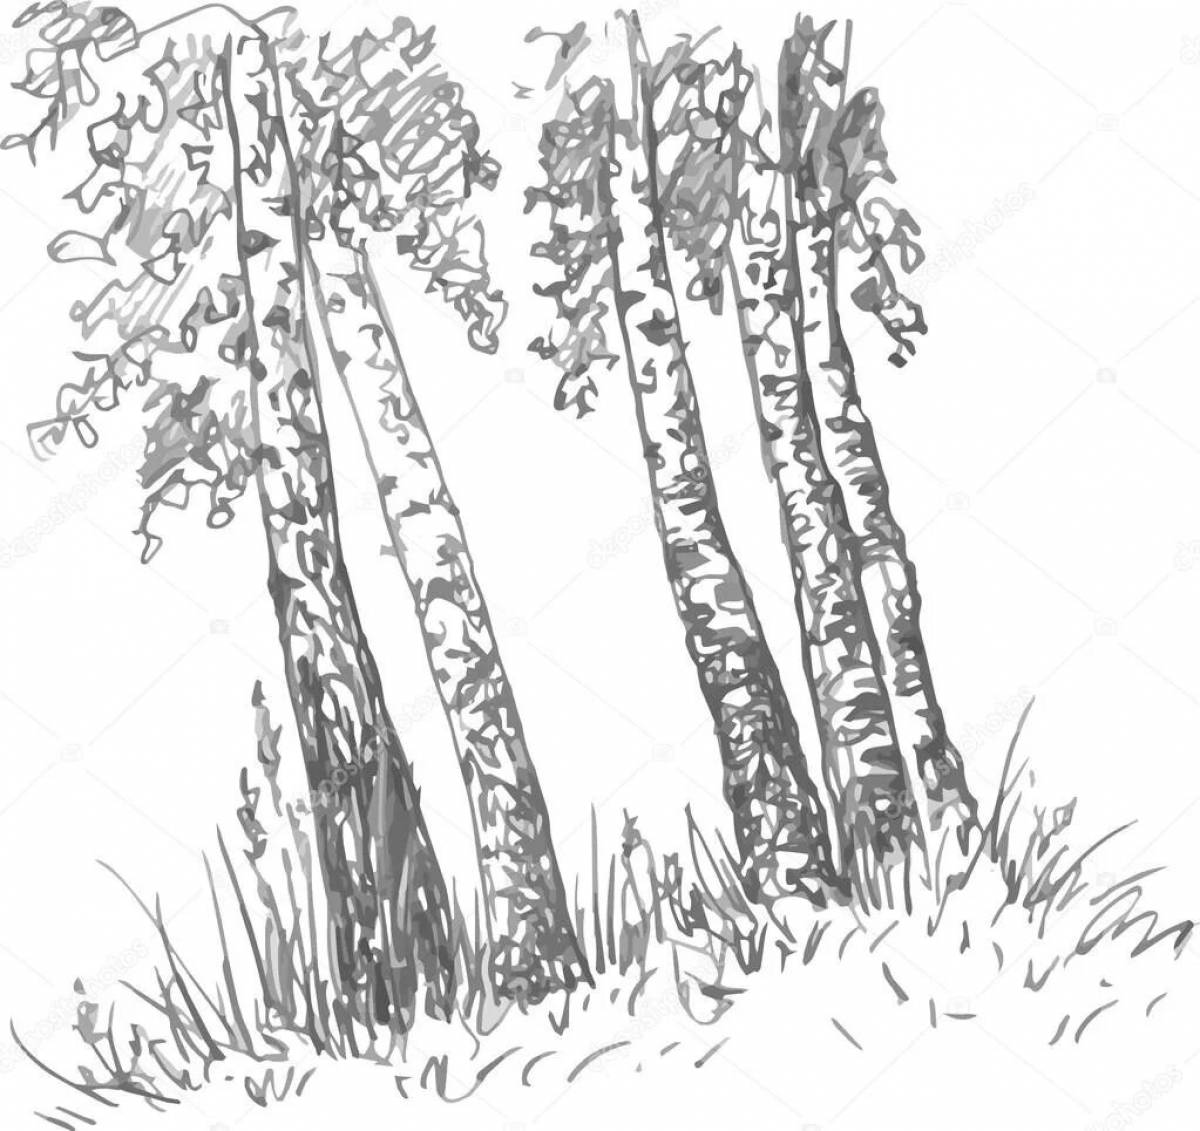 Birch grove for kids #6